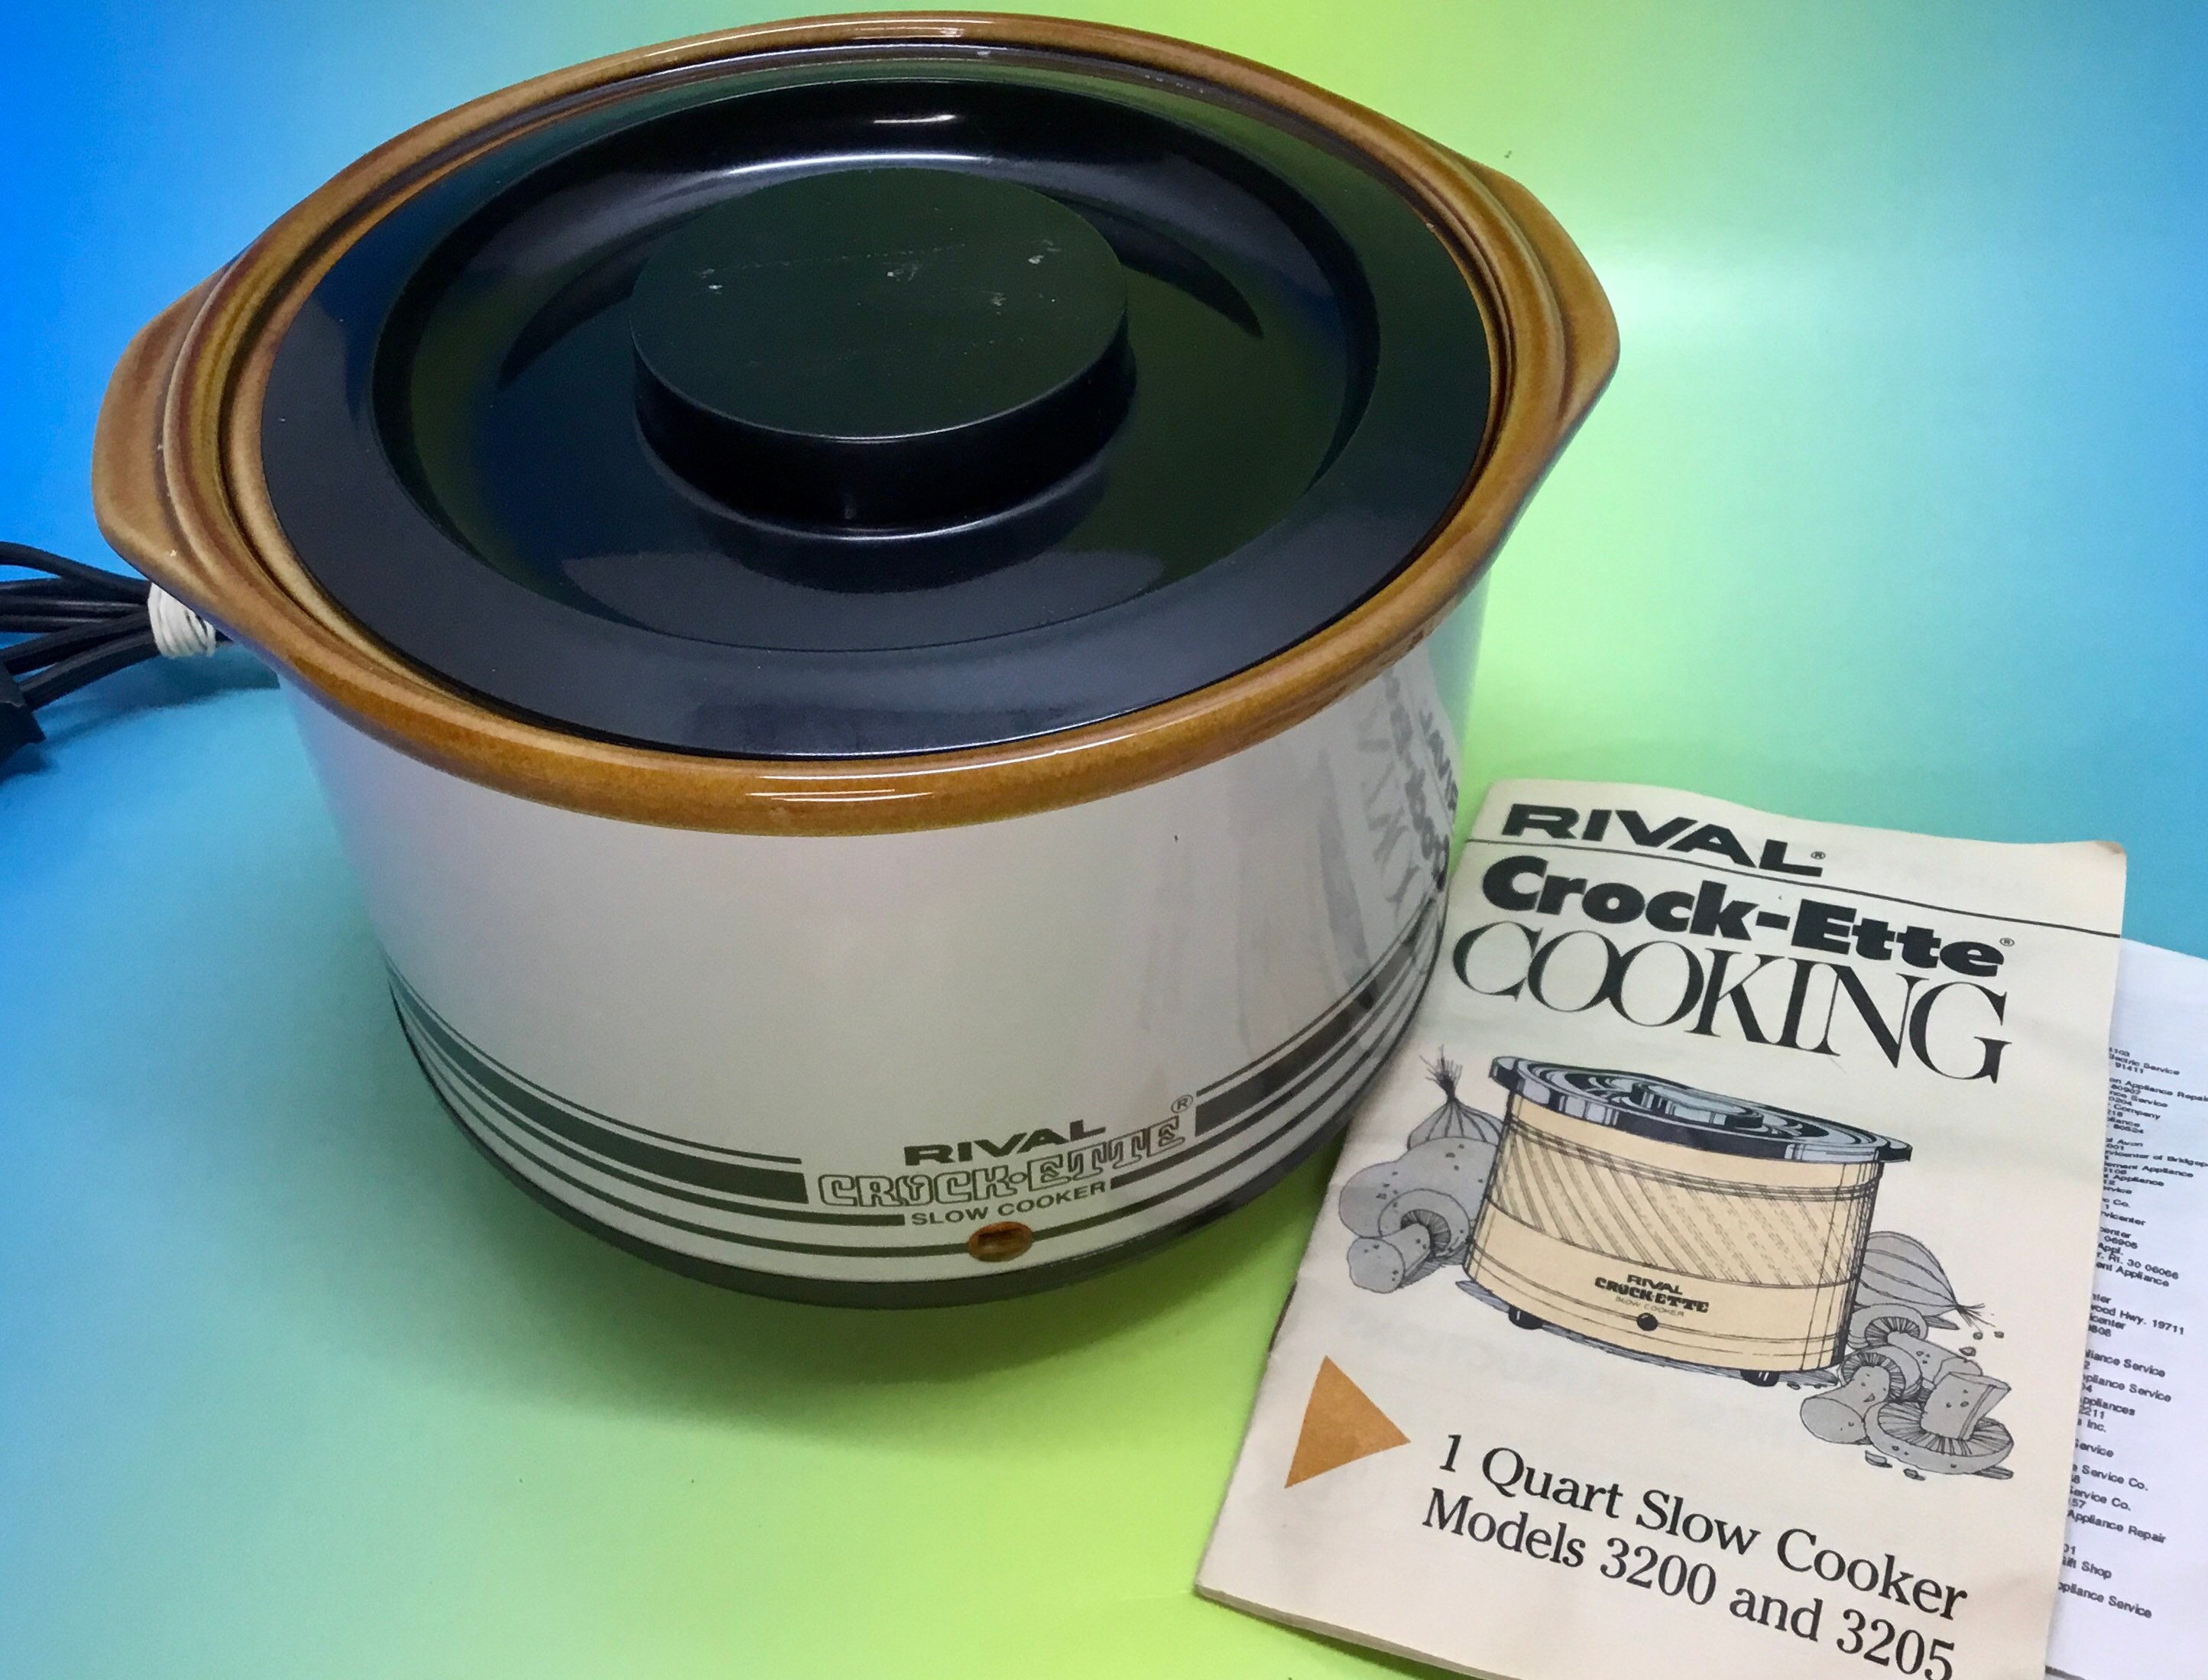 Rival Crock-Ette 1 Qt Mini Crock Pot Stoneware Slow Cooker Model